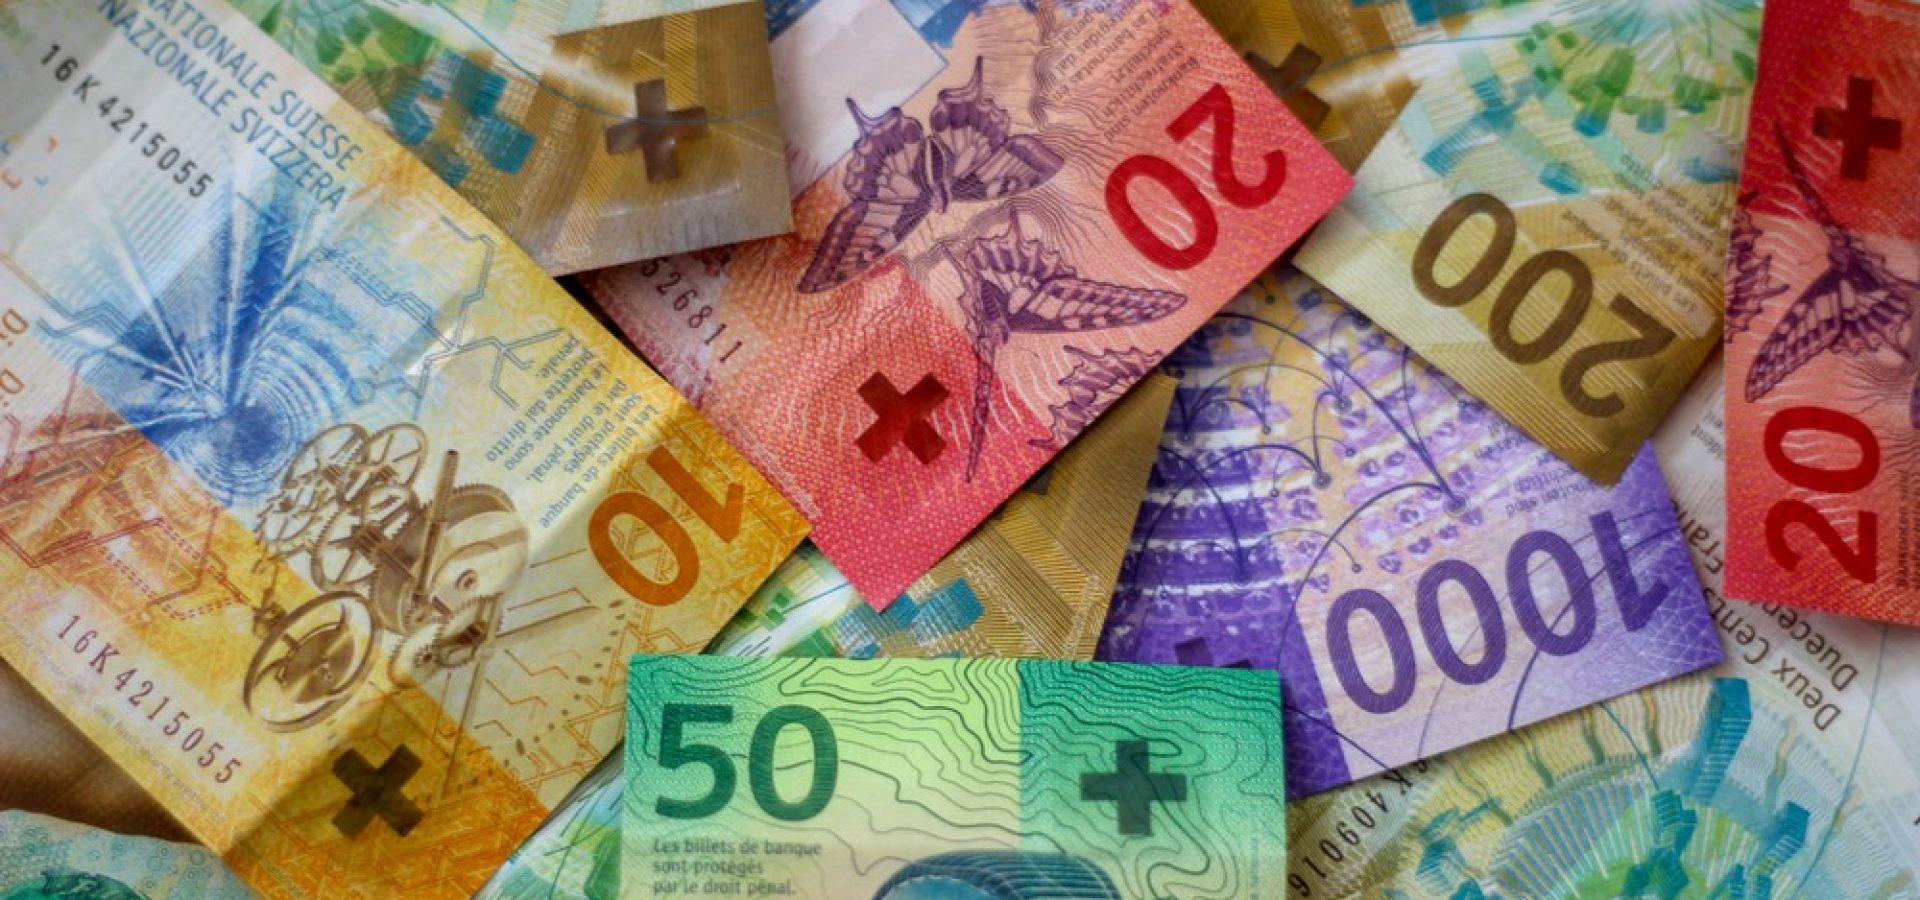 Washington: Swiss franc bills.